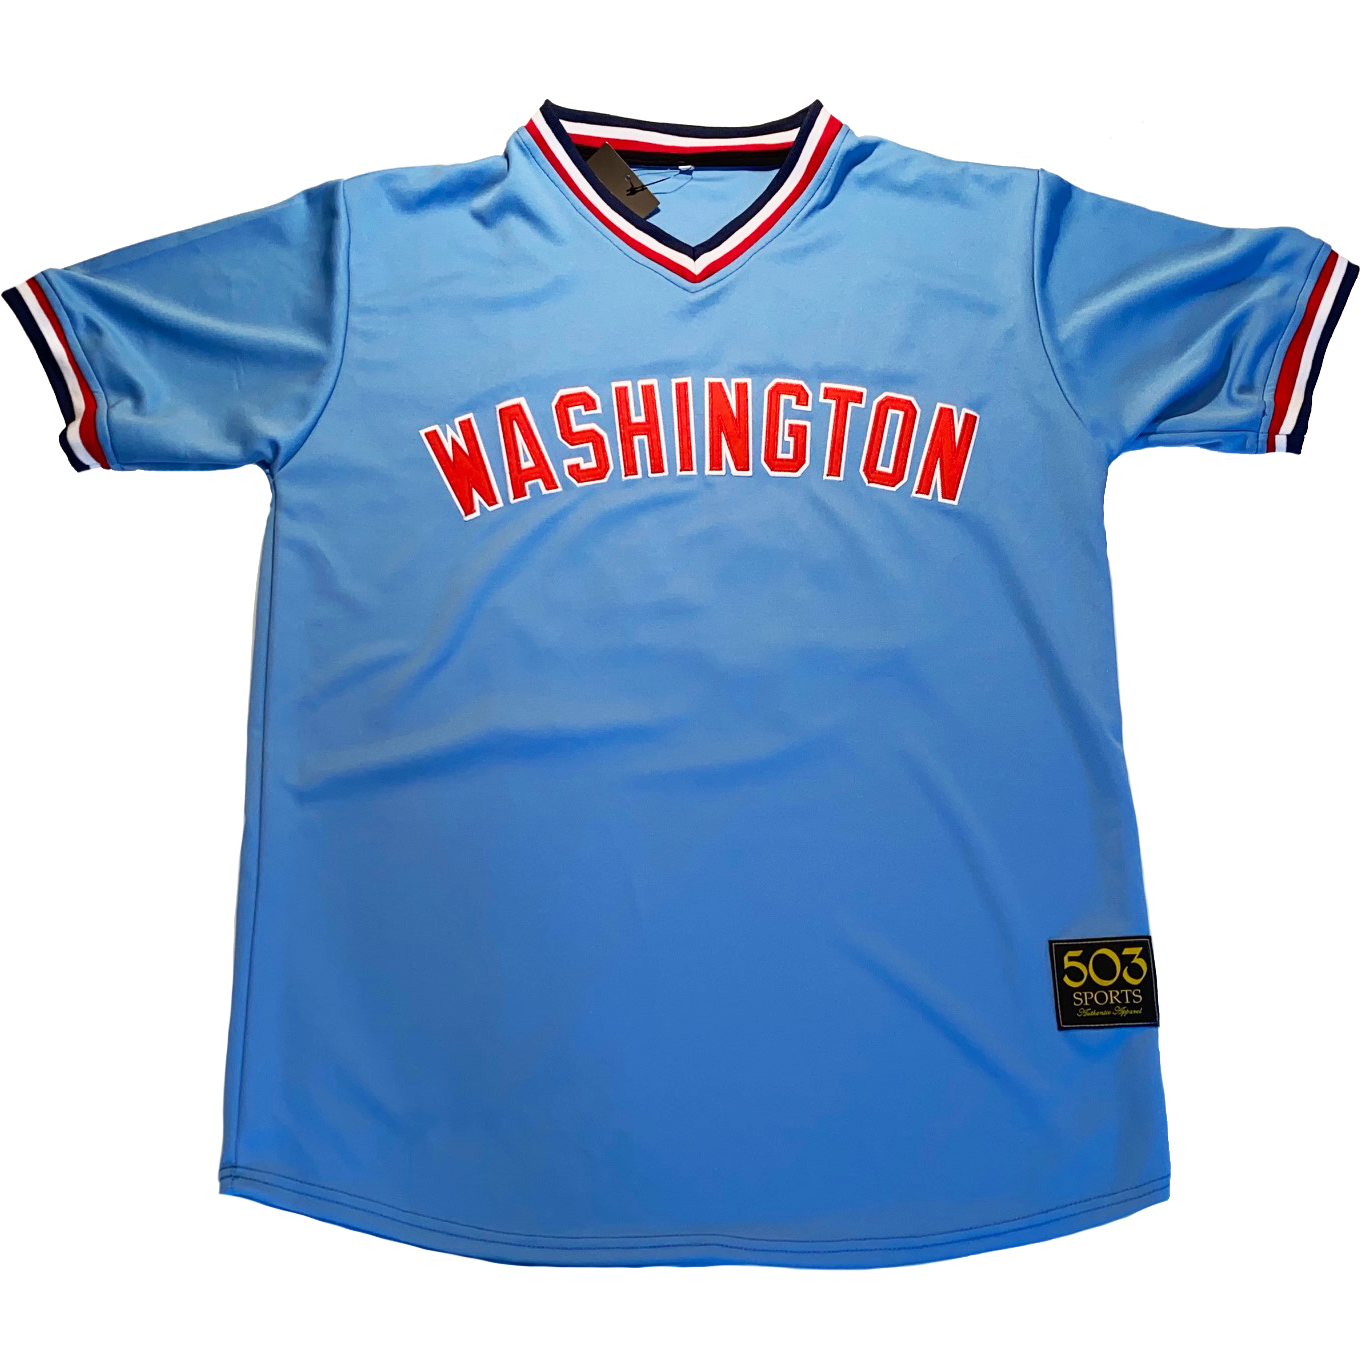 Washington Padres Jersey - Blue - Medium - Royal Retros